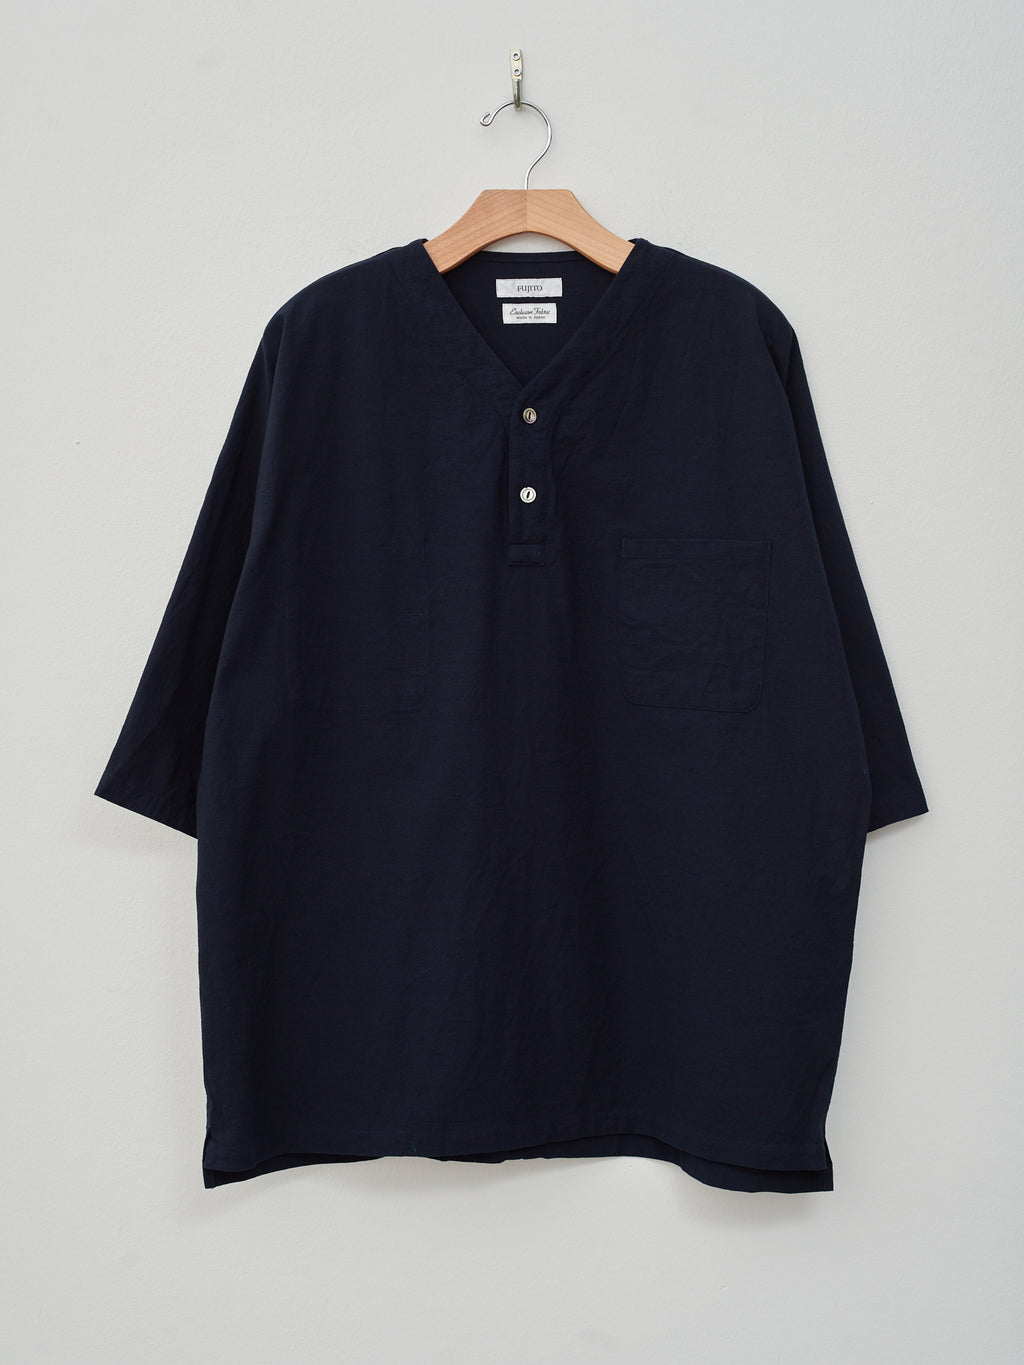 Namu Shop - Fujito Henley Neck Shirt - Dark Navy